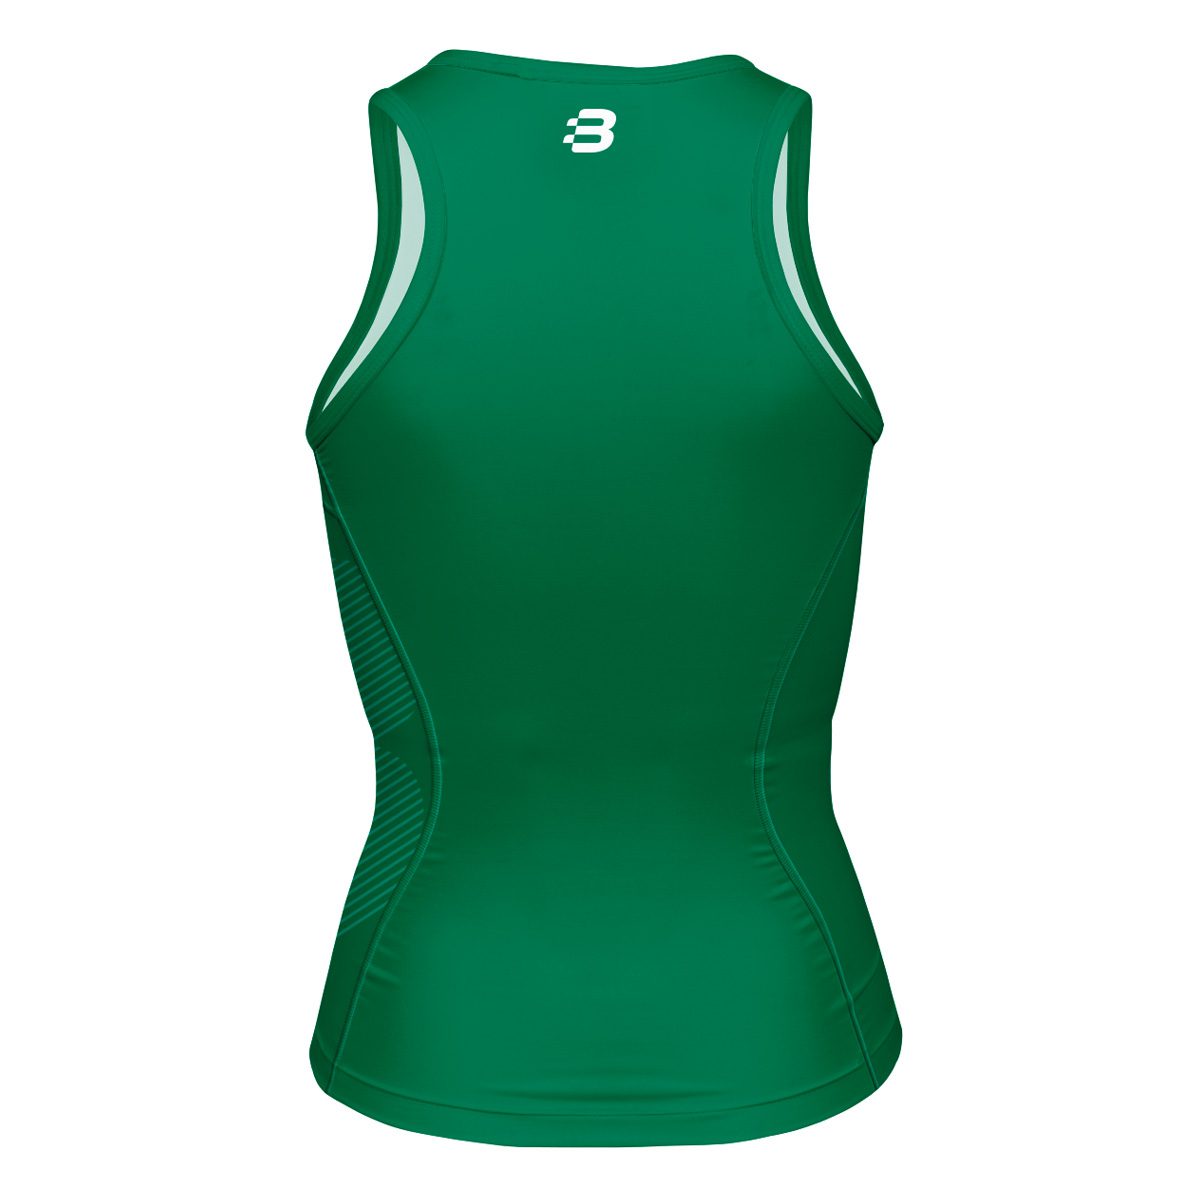 Women's Compression Vest - Emerald Green - Blackchrome